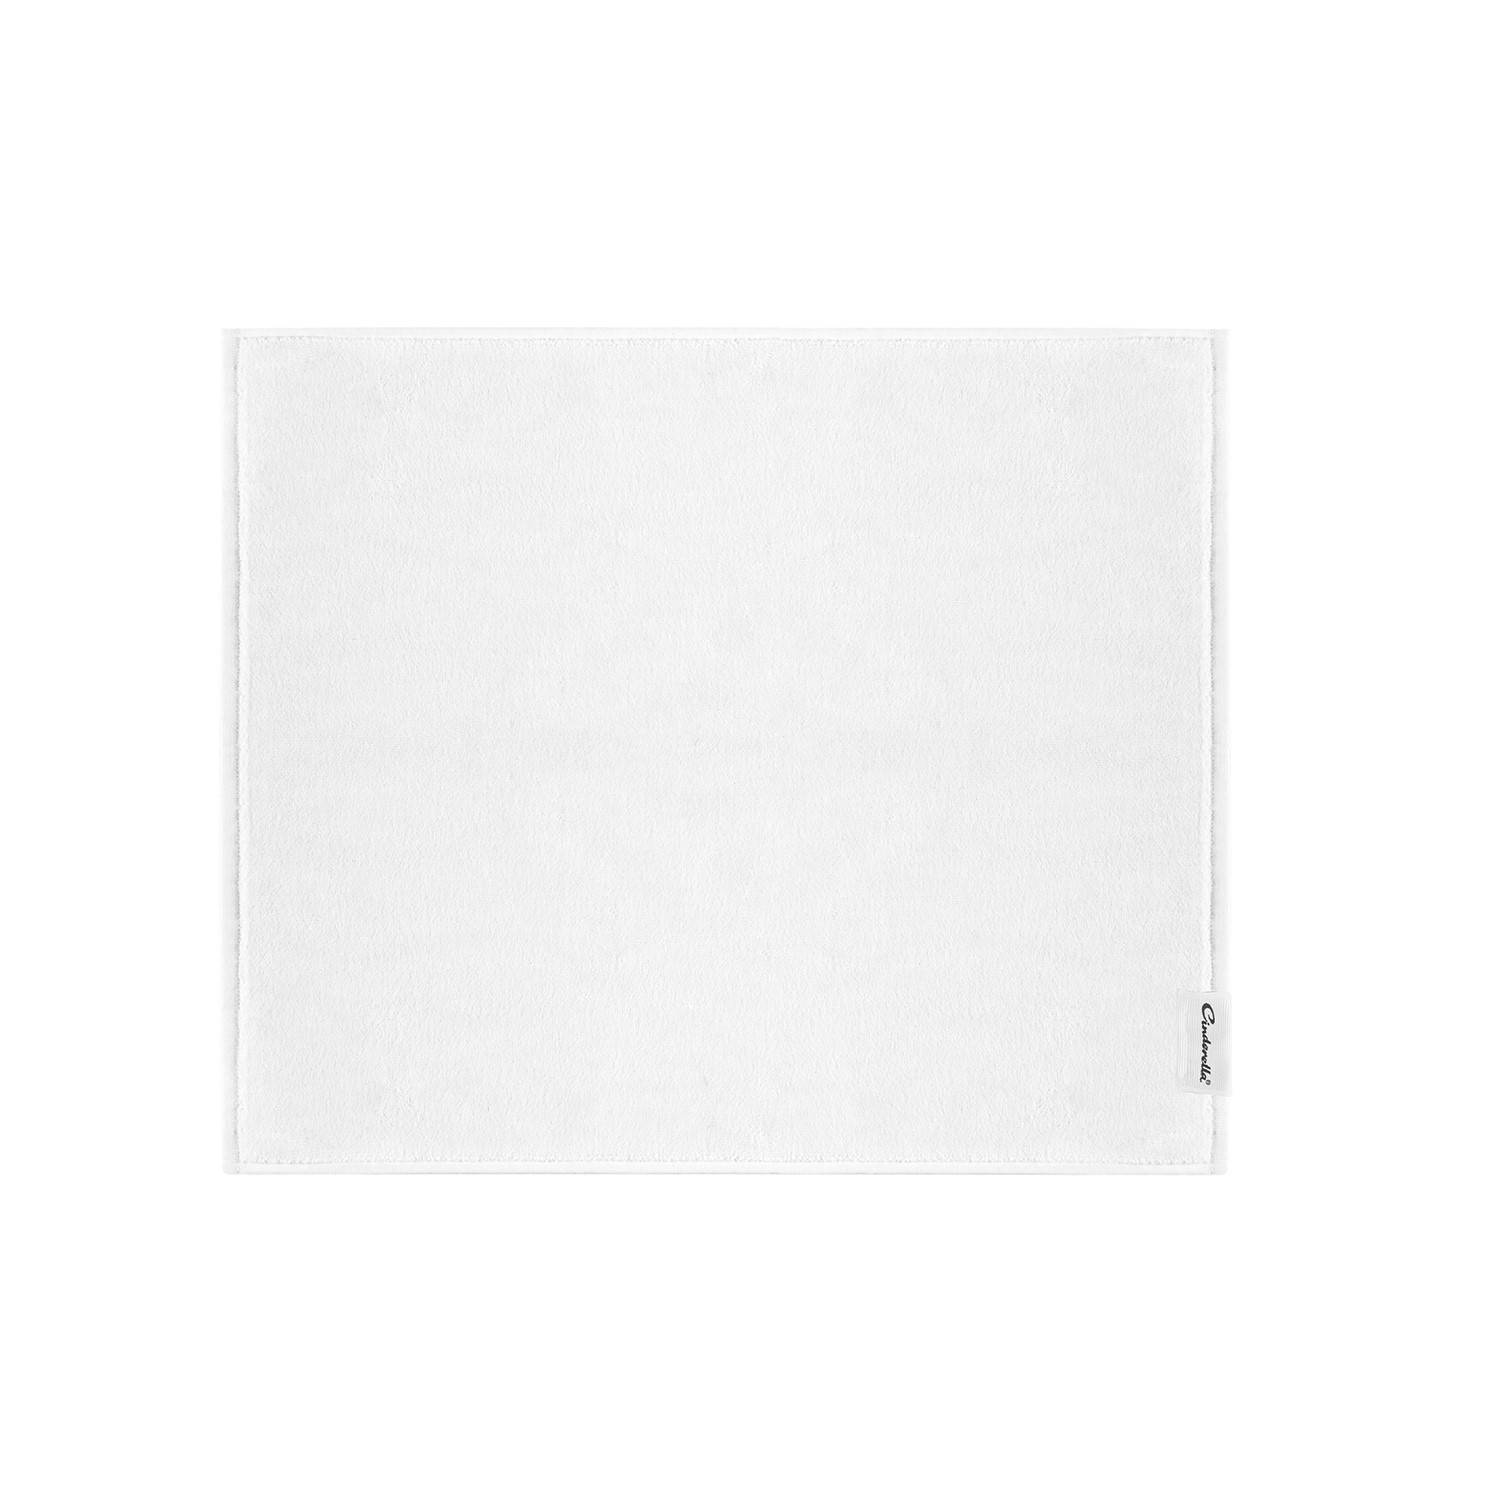 Cinderella badmat Sundays - 50x60 cm - White